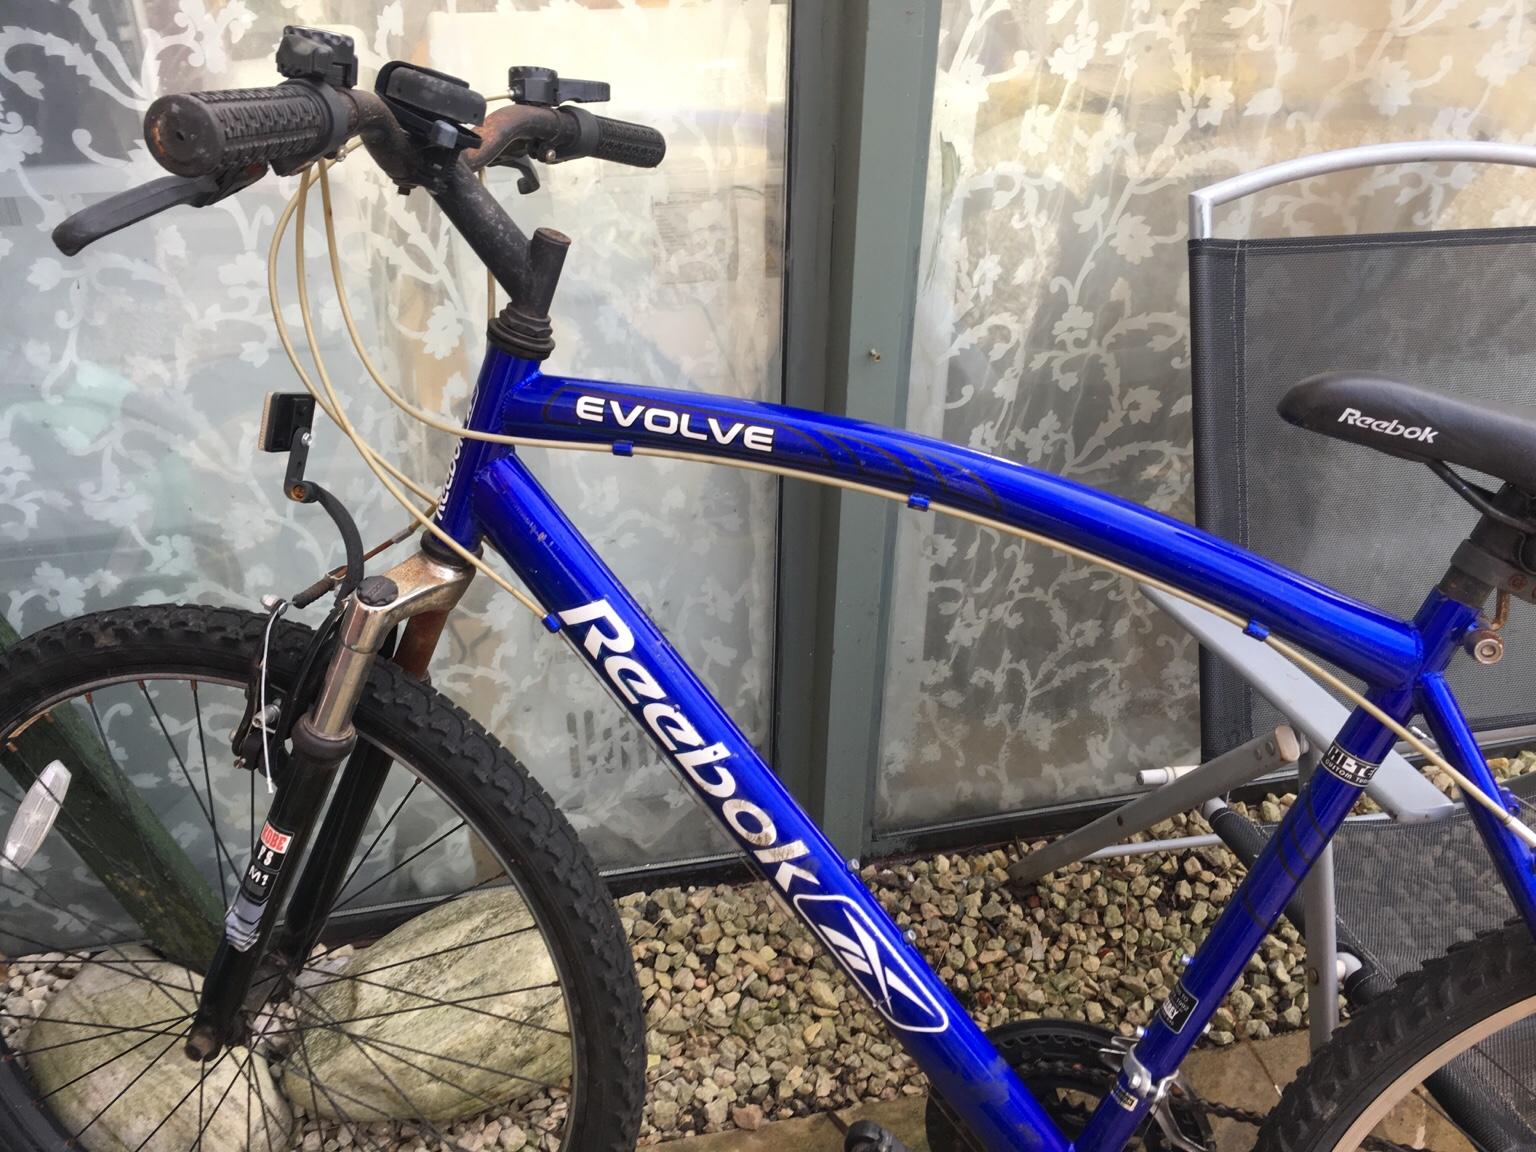 Reebok evolve bike in NG21 Sherwood for 